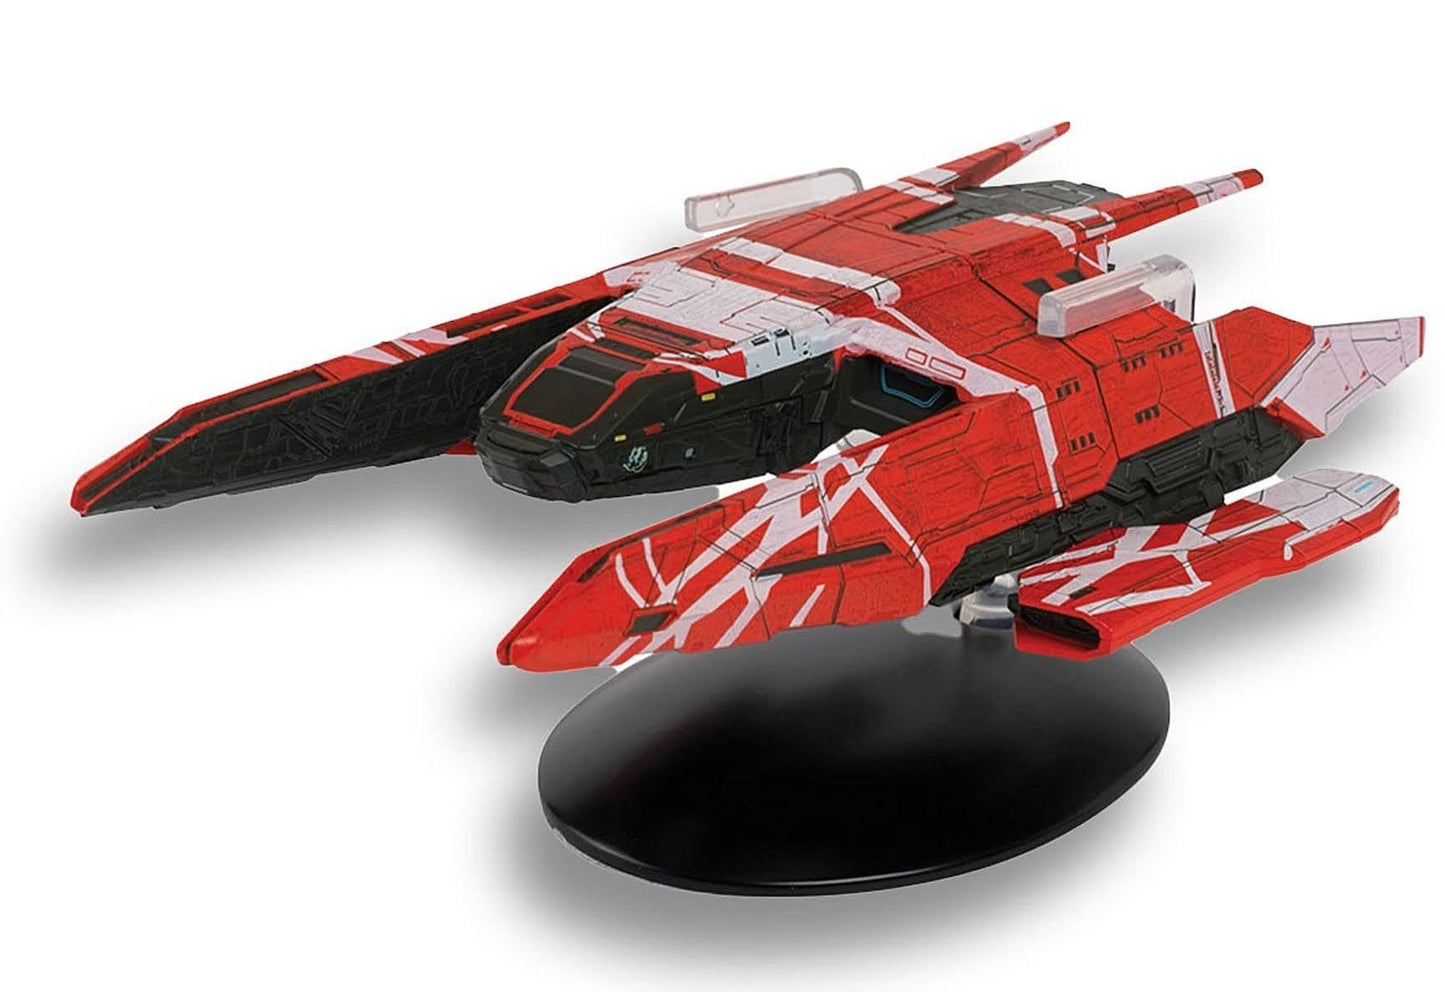 #25 La Sirena XL EDITION Model Diecast Ship (Eaglemoss / Star Trek: Picard)